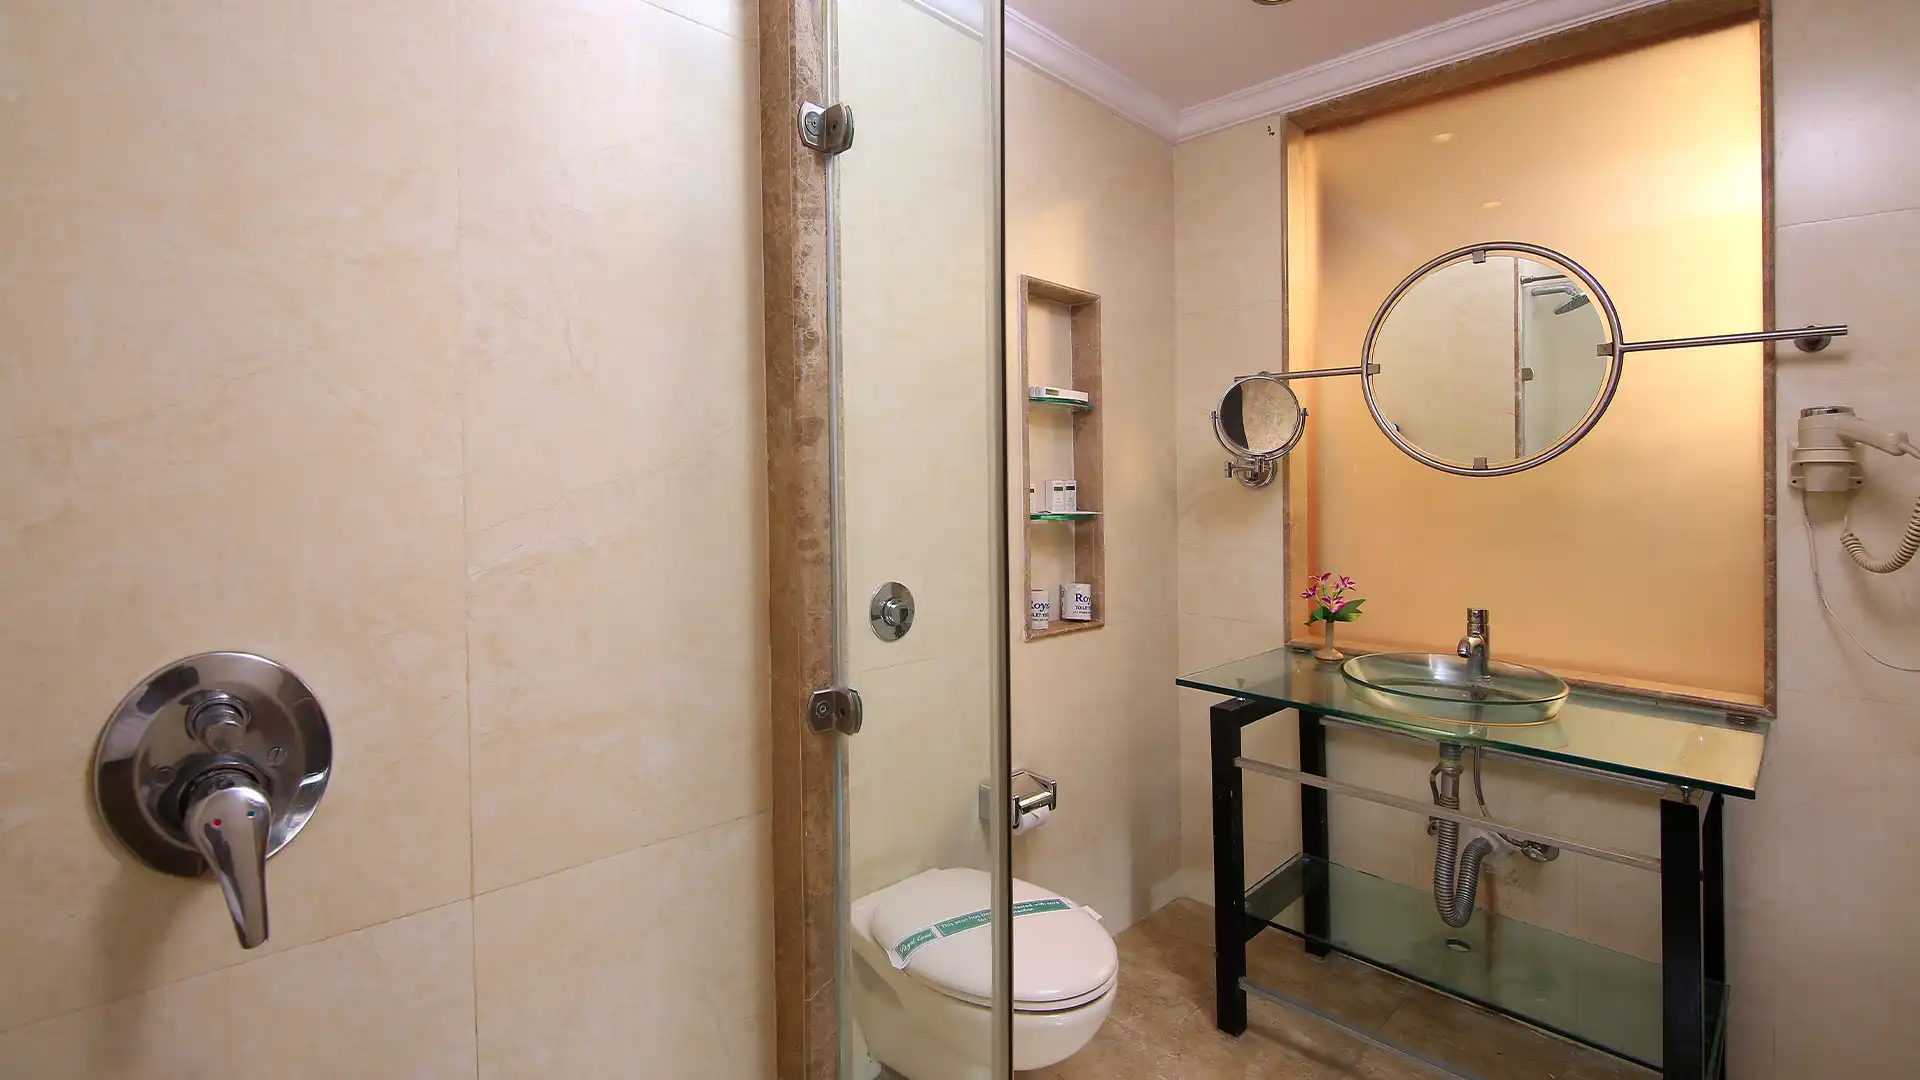 Spacious bathroom with vanity basin and mirror